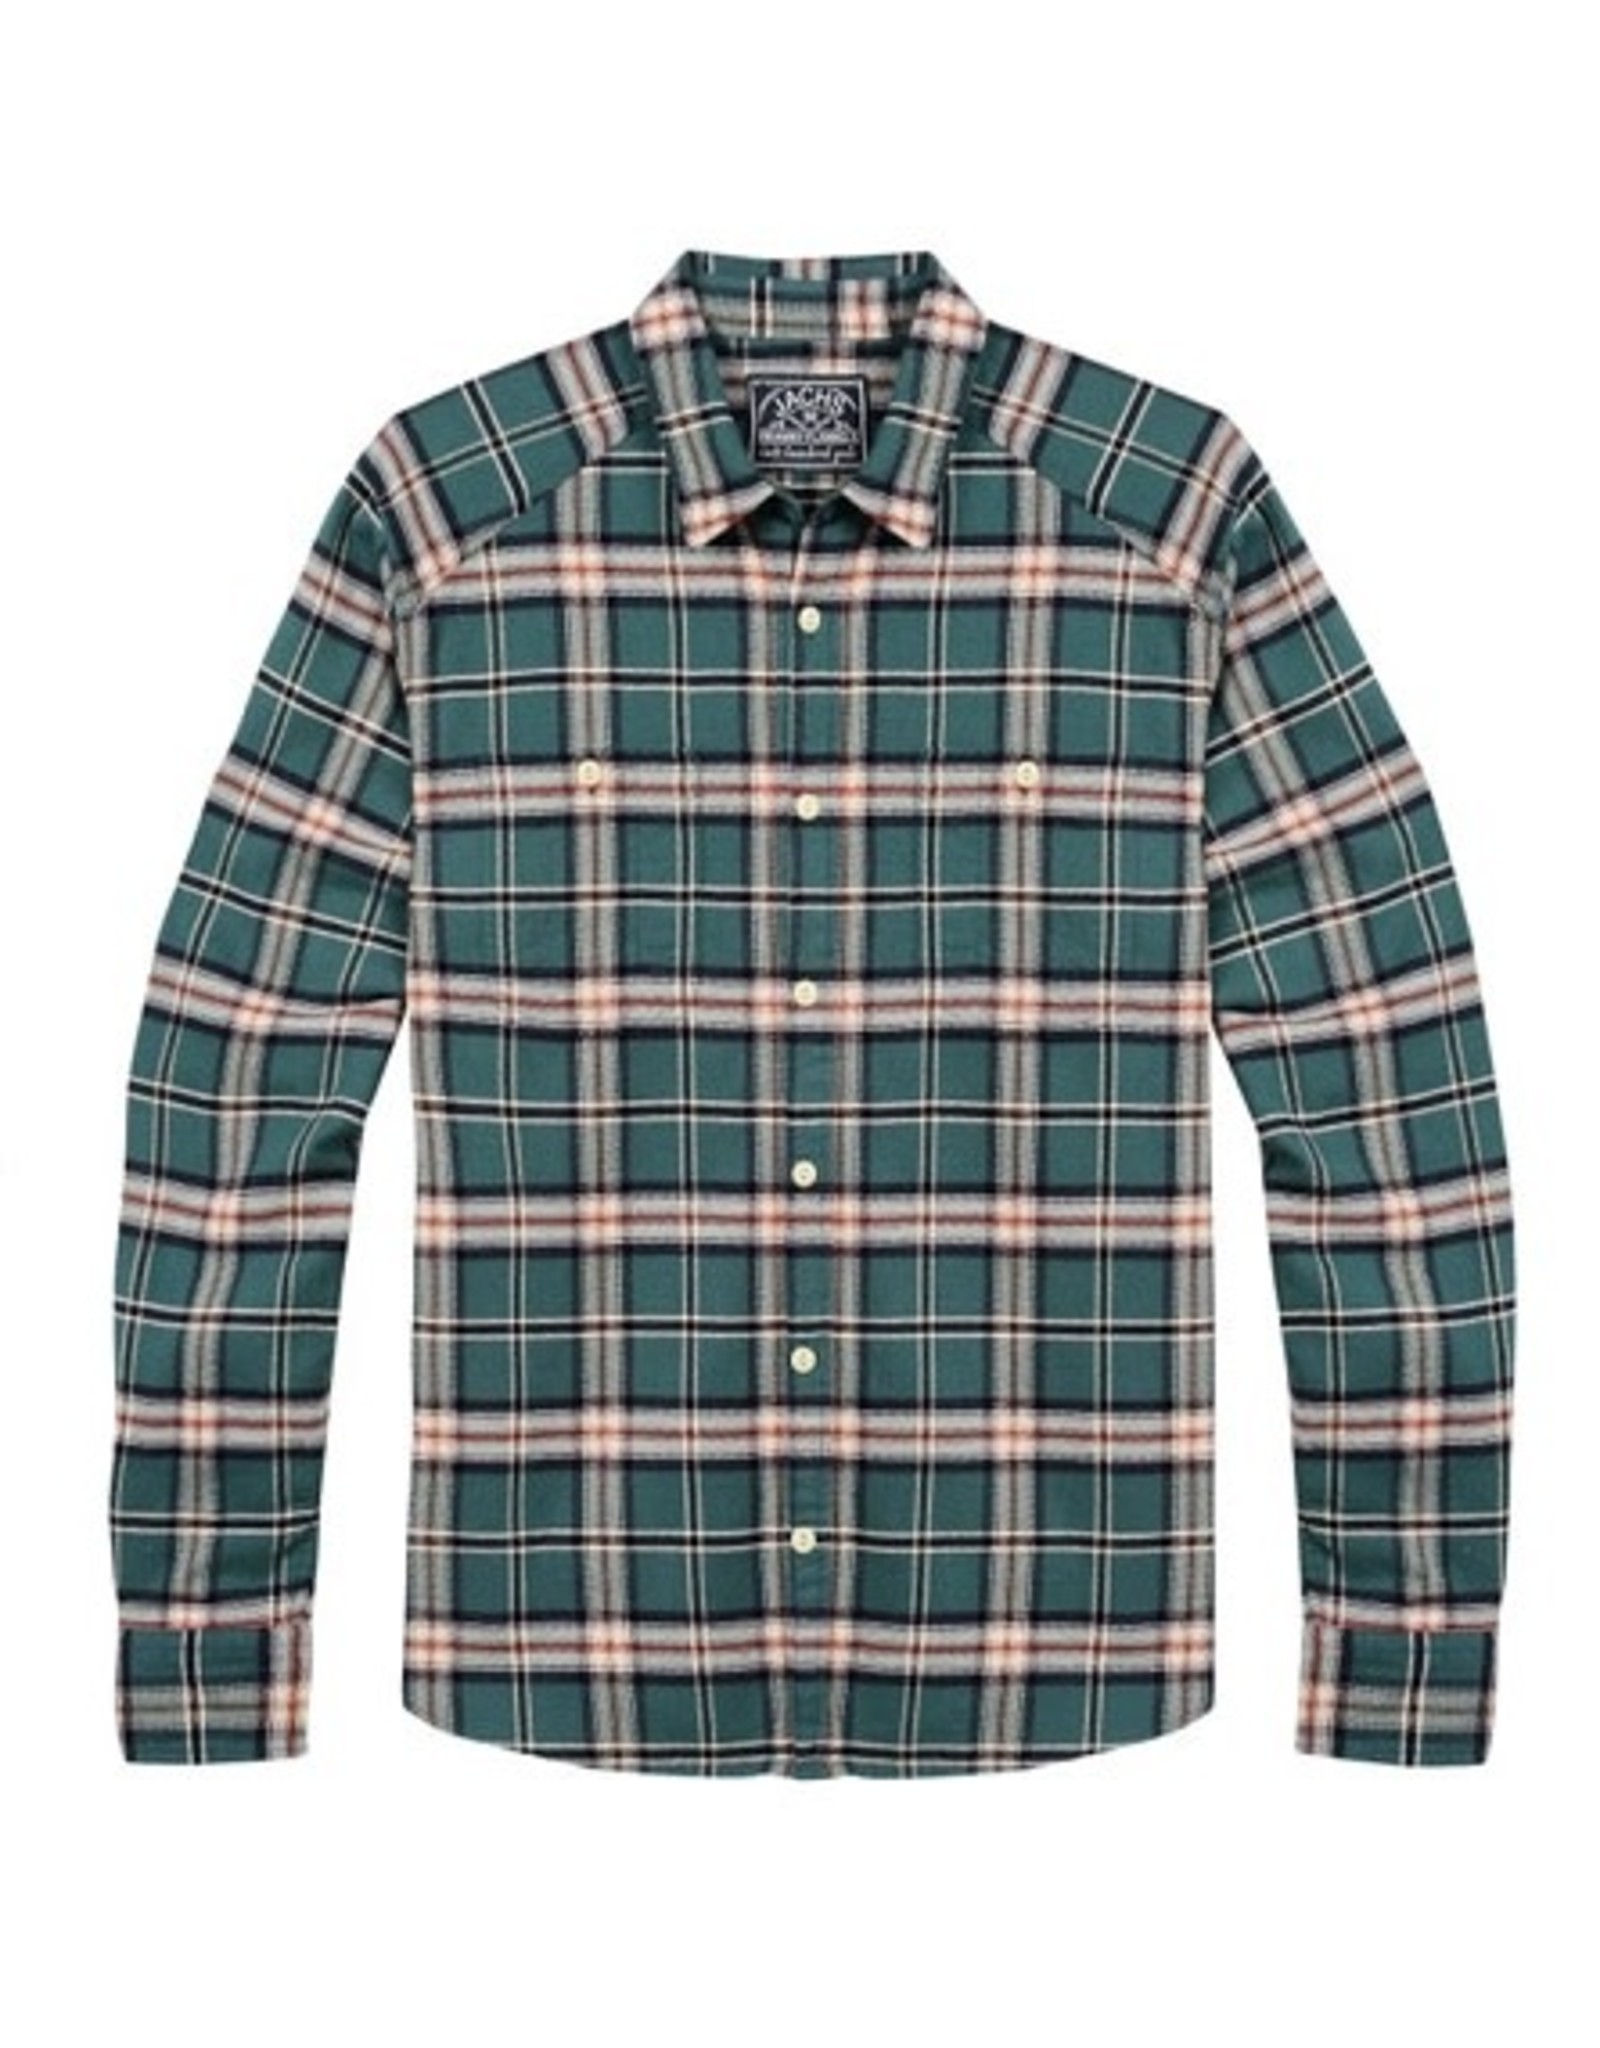 Jach's NY Men's Plaid Shirt - Long Sleeve Flannel